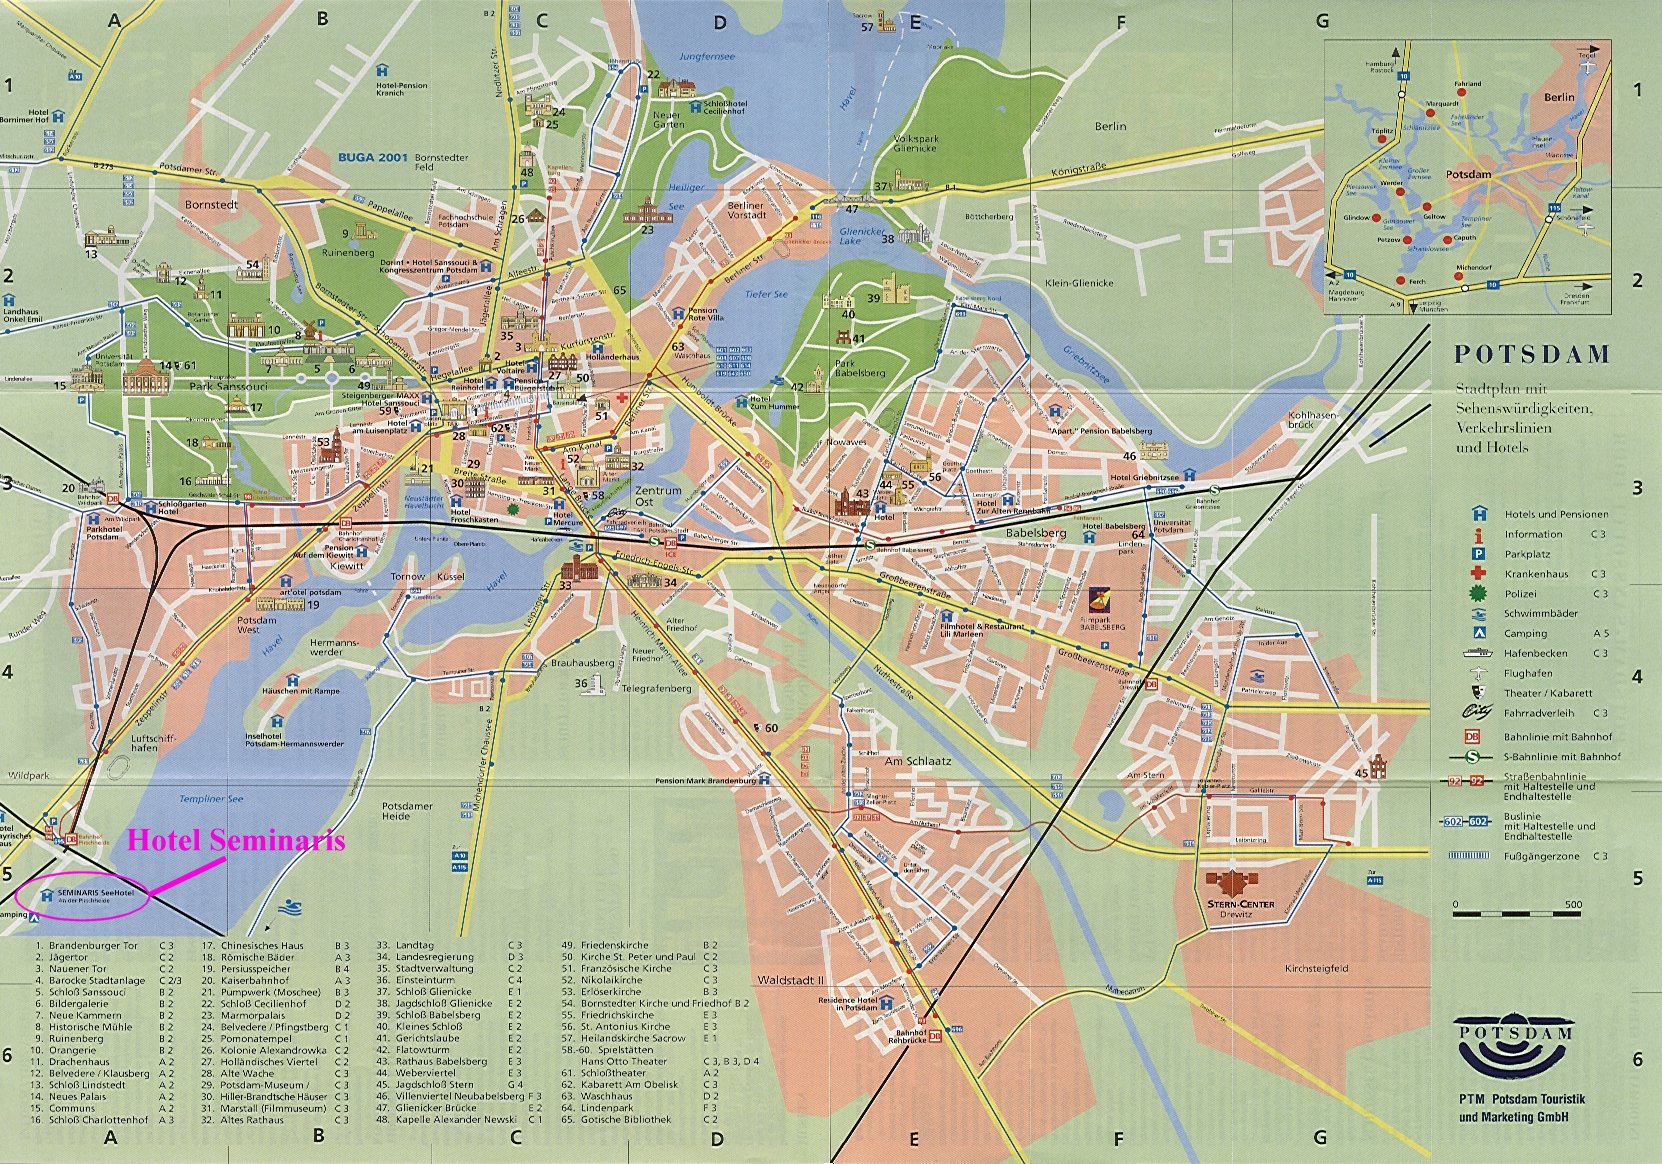 Potsdam tourist map